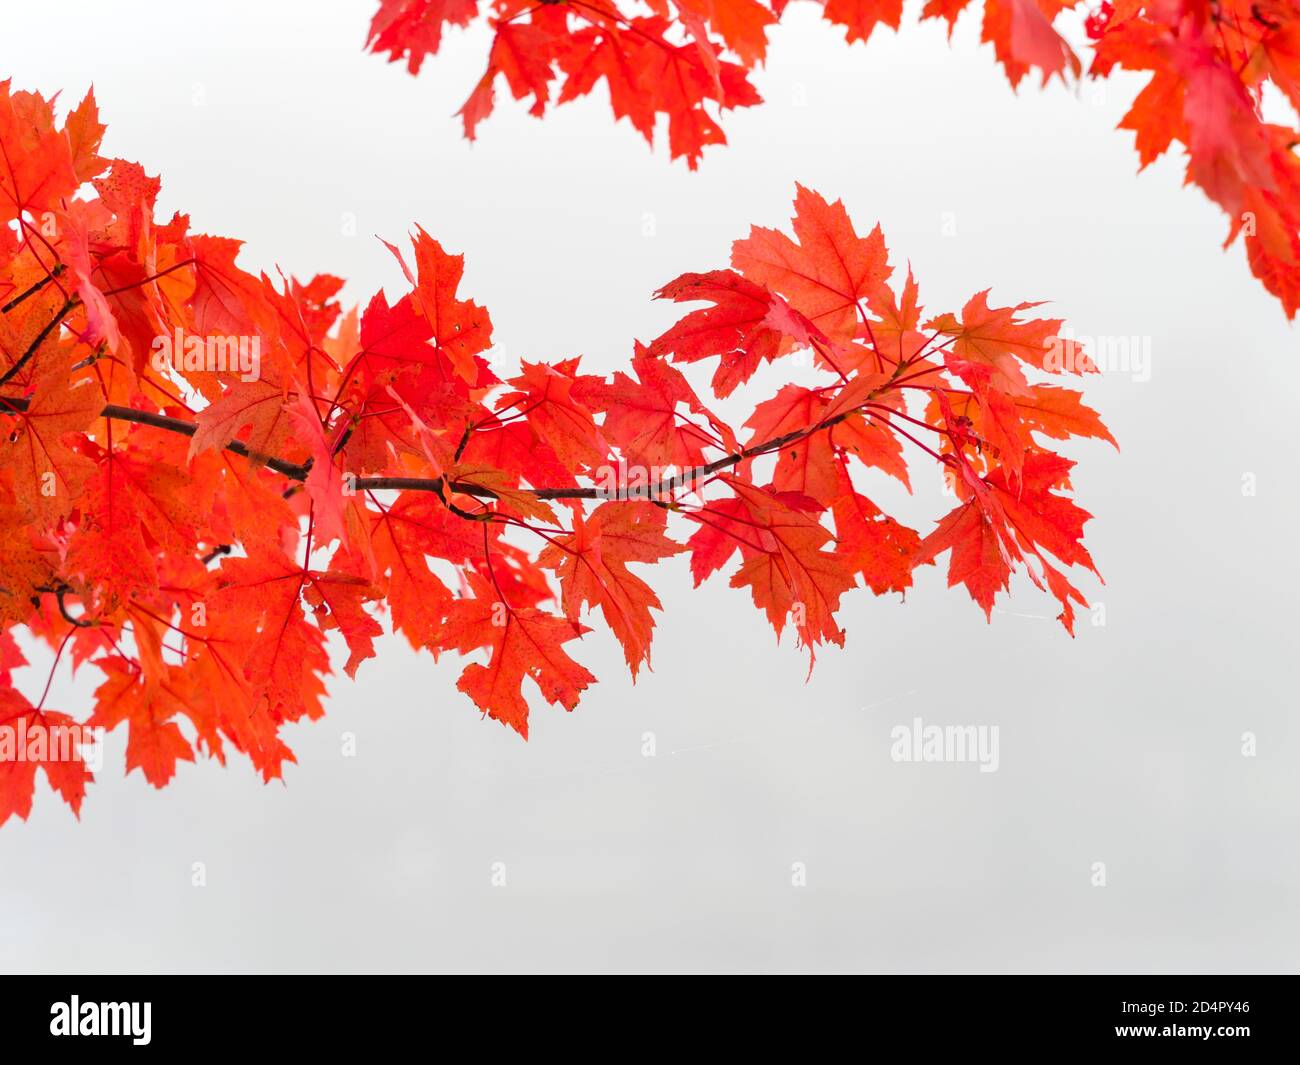 Intensive Red vivid color colored leaves Fall Autumn season seasonal Stock Photo